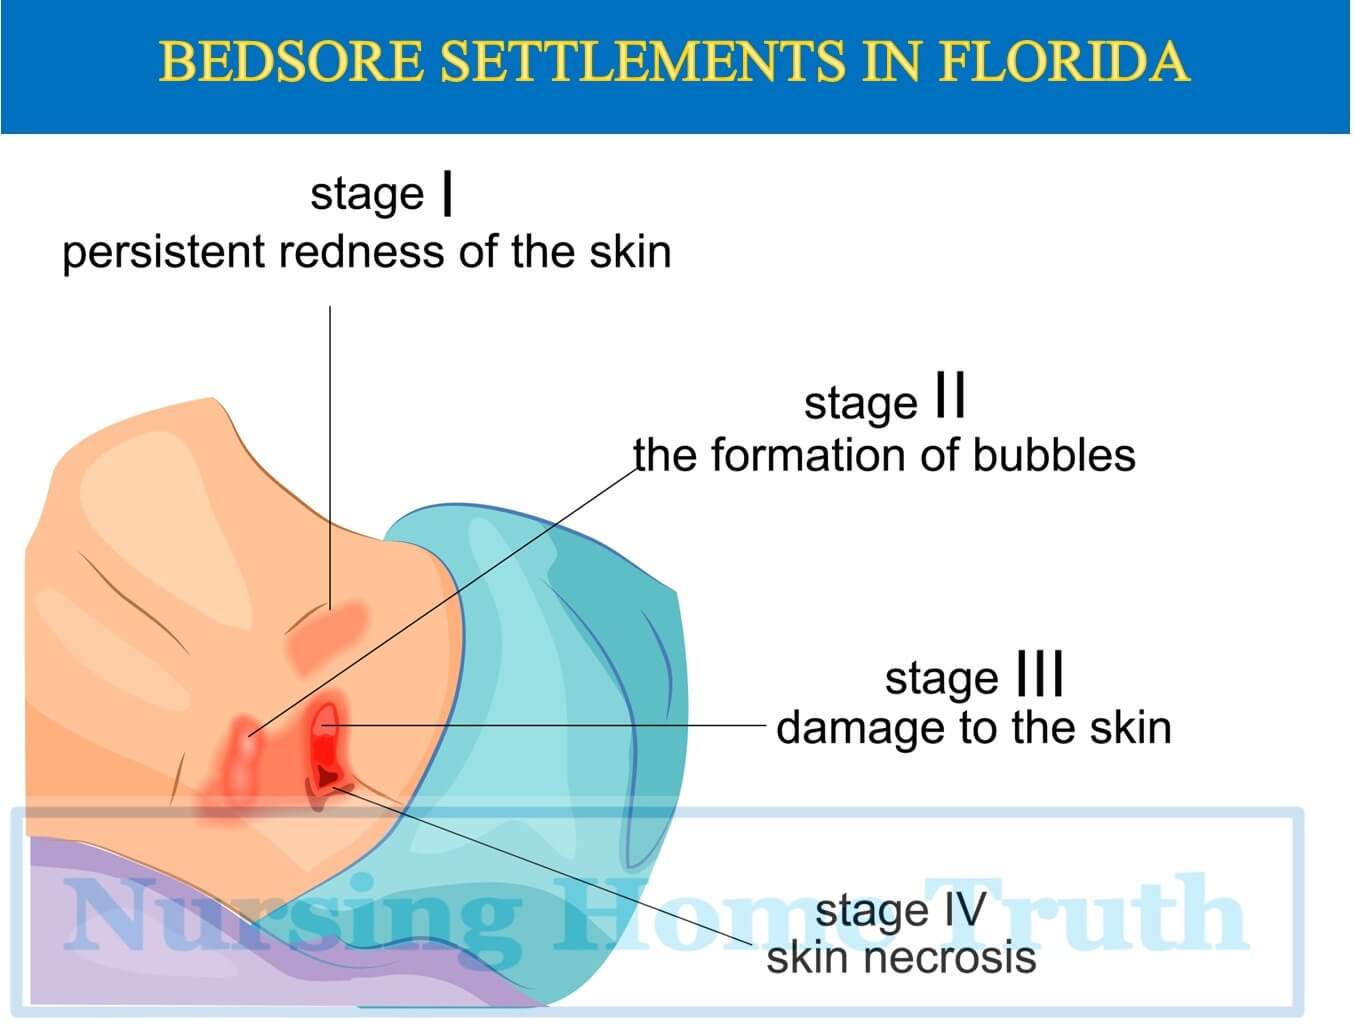 Florida bed sore Settlements 